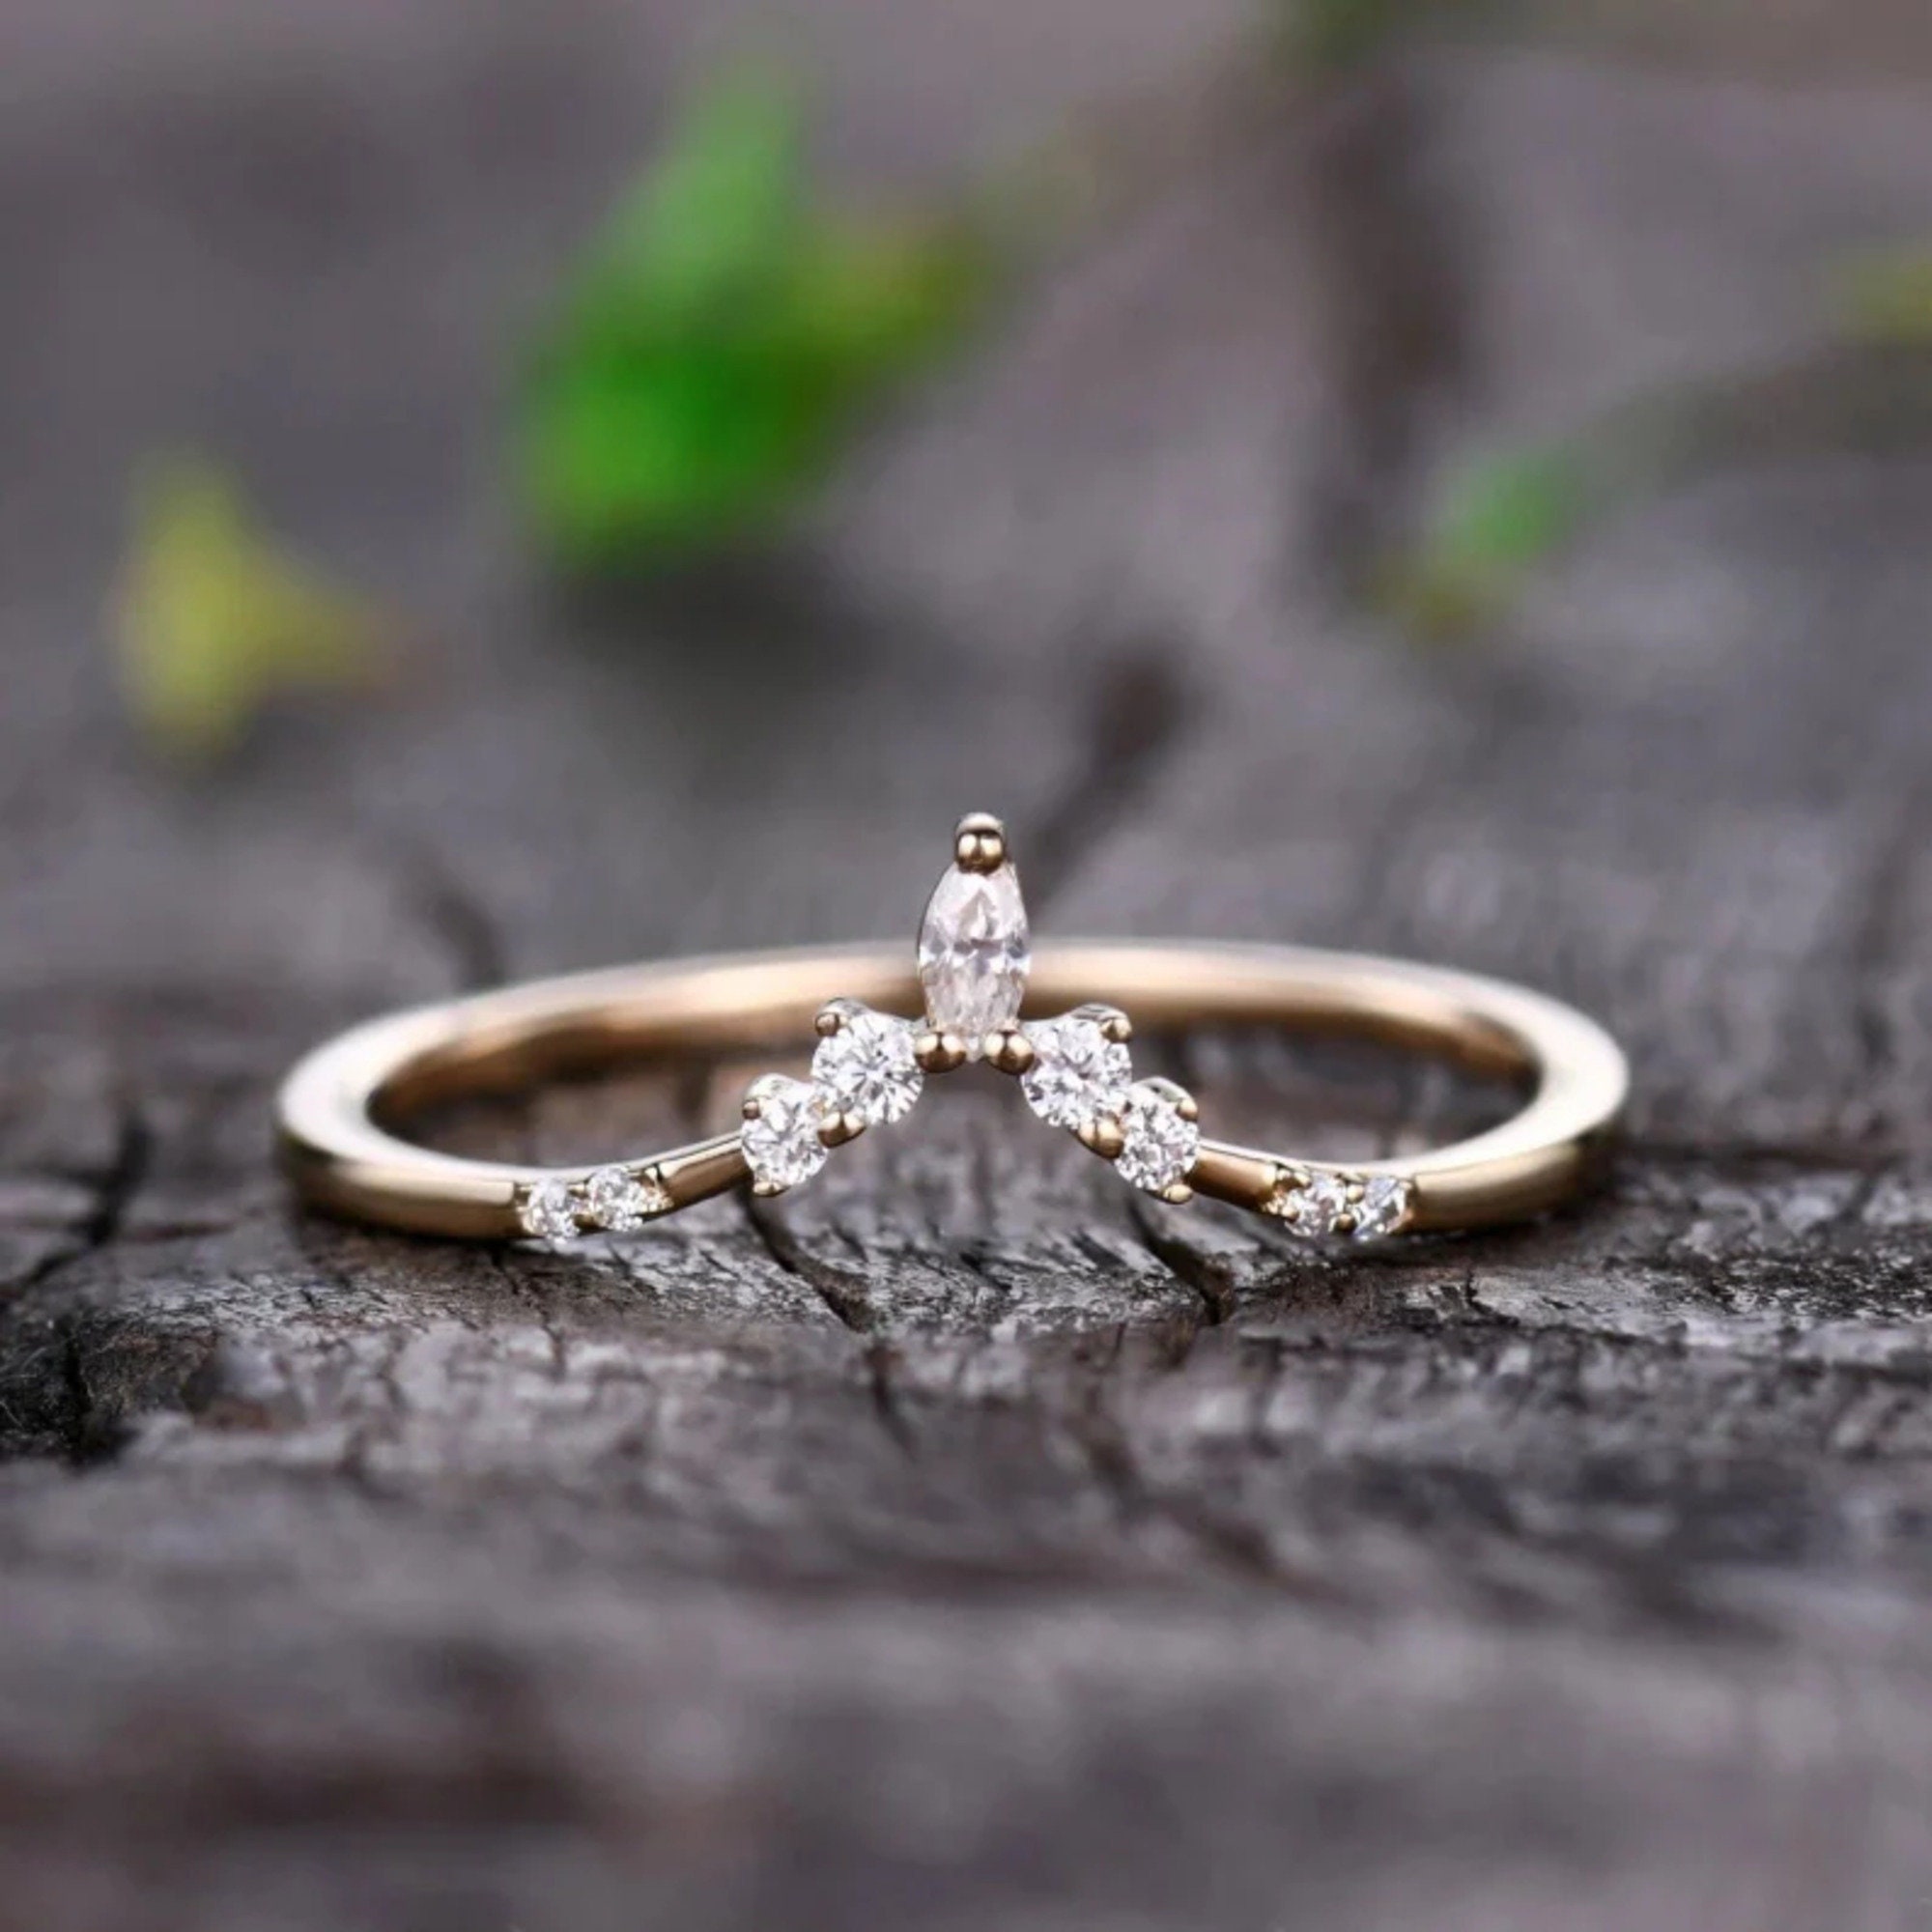 Modern double band wedding ring 14k rose gold ring ADER146S